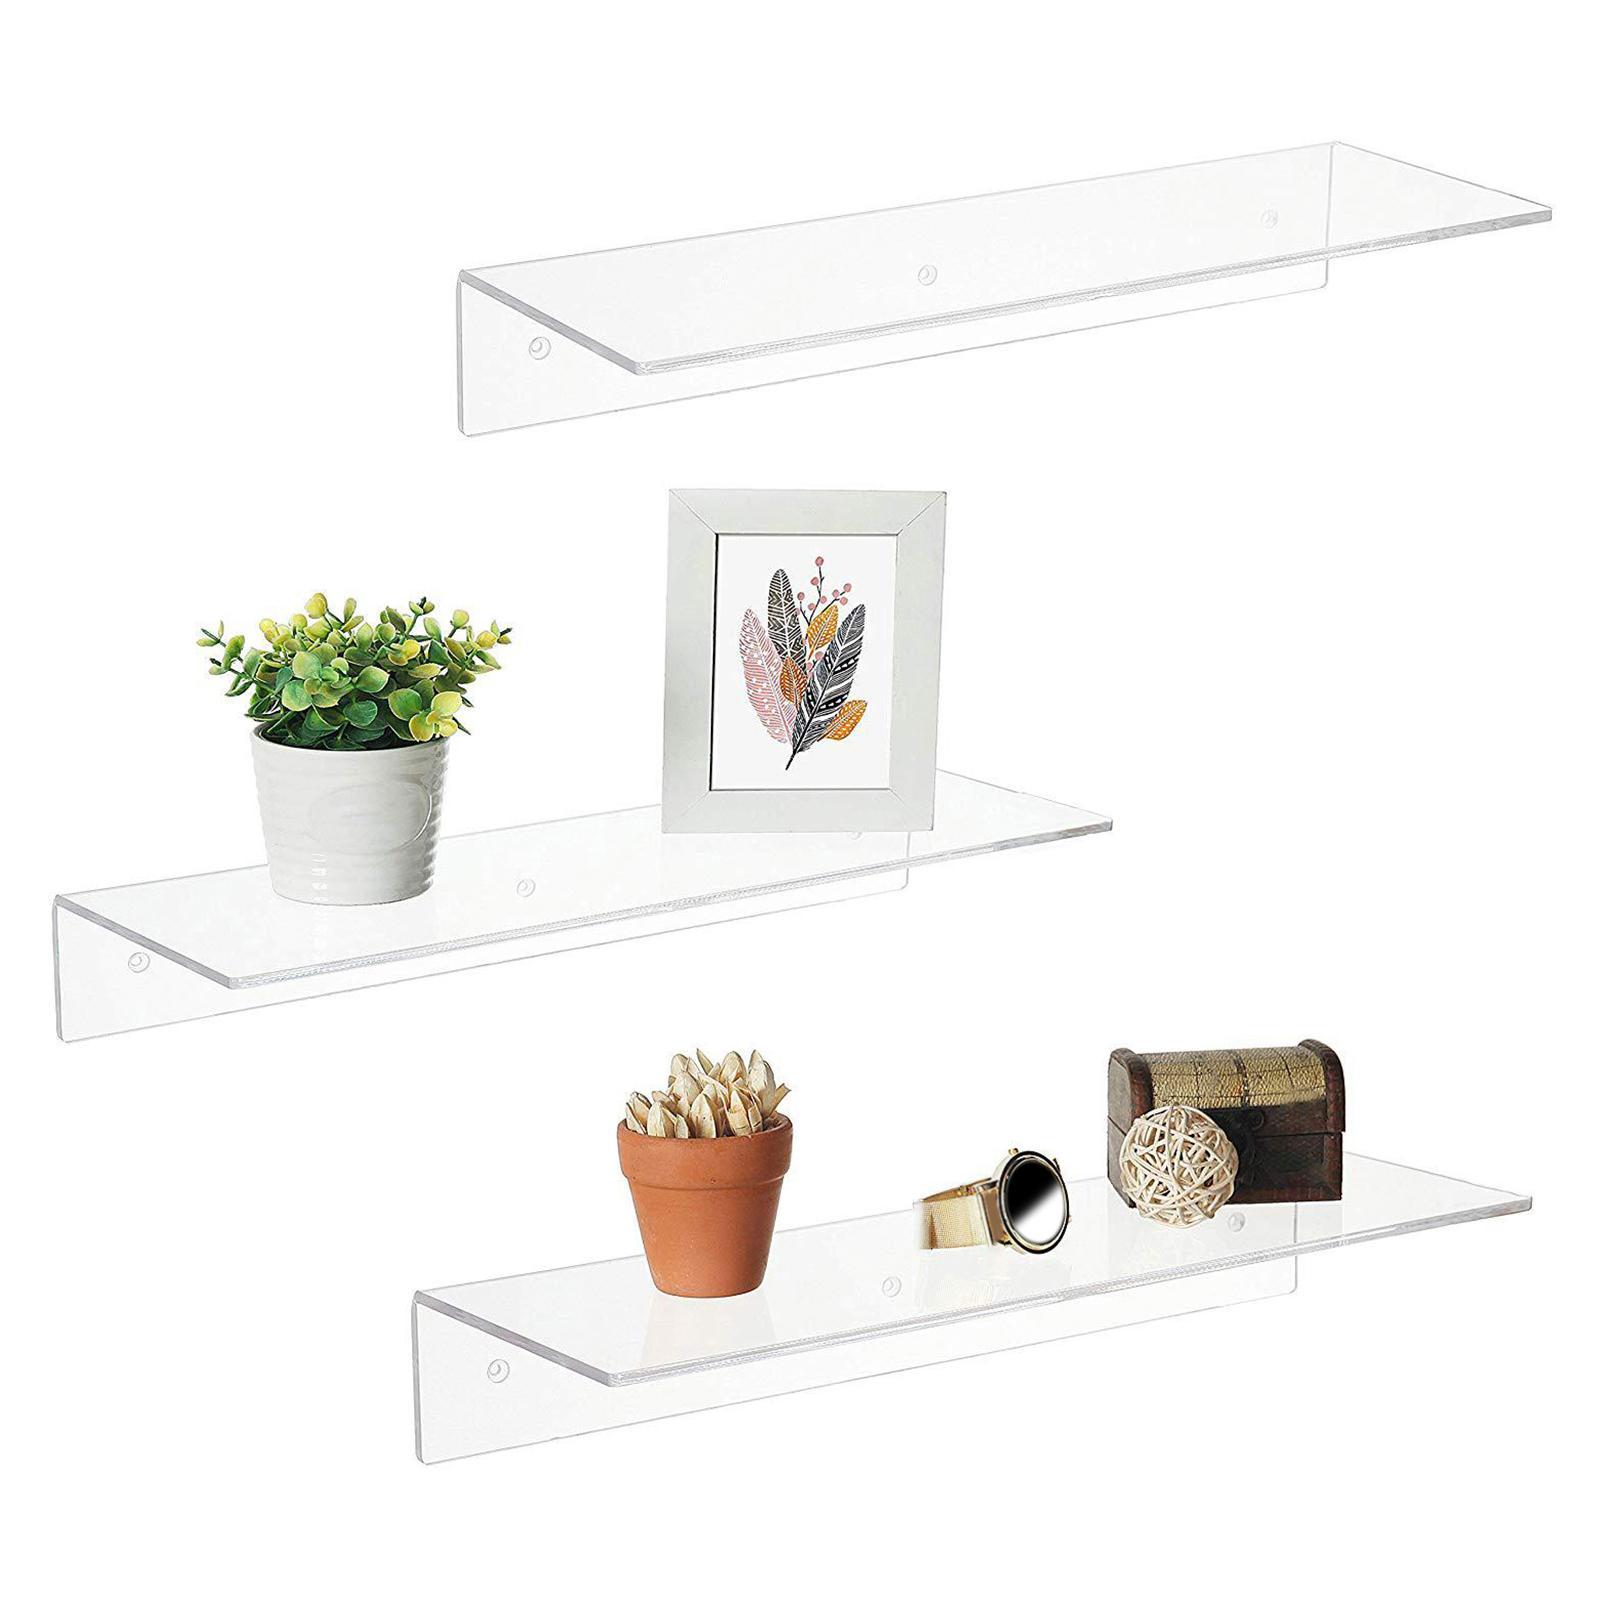 Acrylic Storage Shelf Book Shelf Holder Decoration for Bathroom Home Office